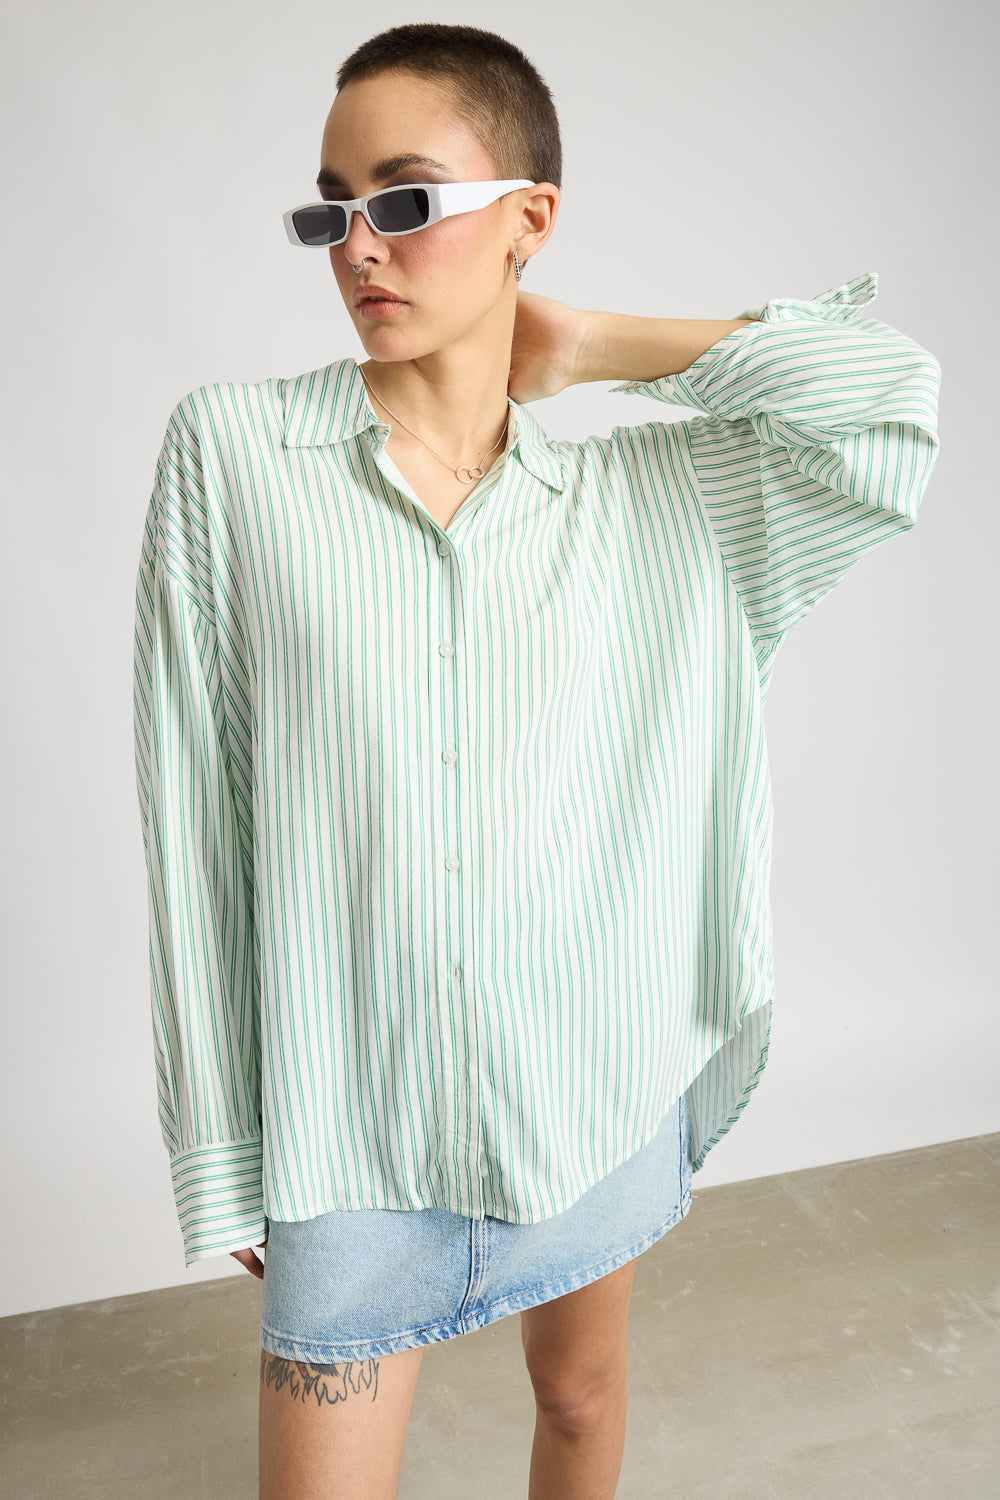 Women's Relaxed Fit Shirt - Green Stripes